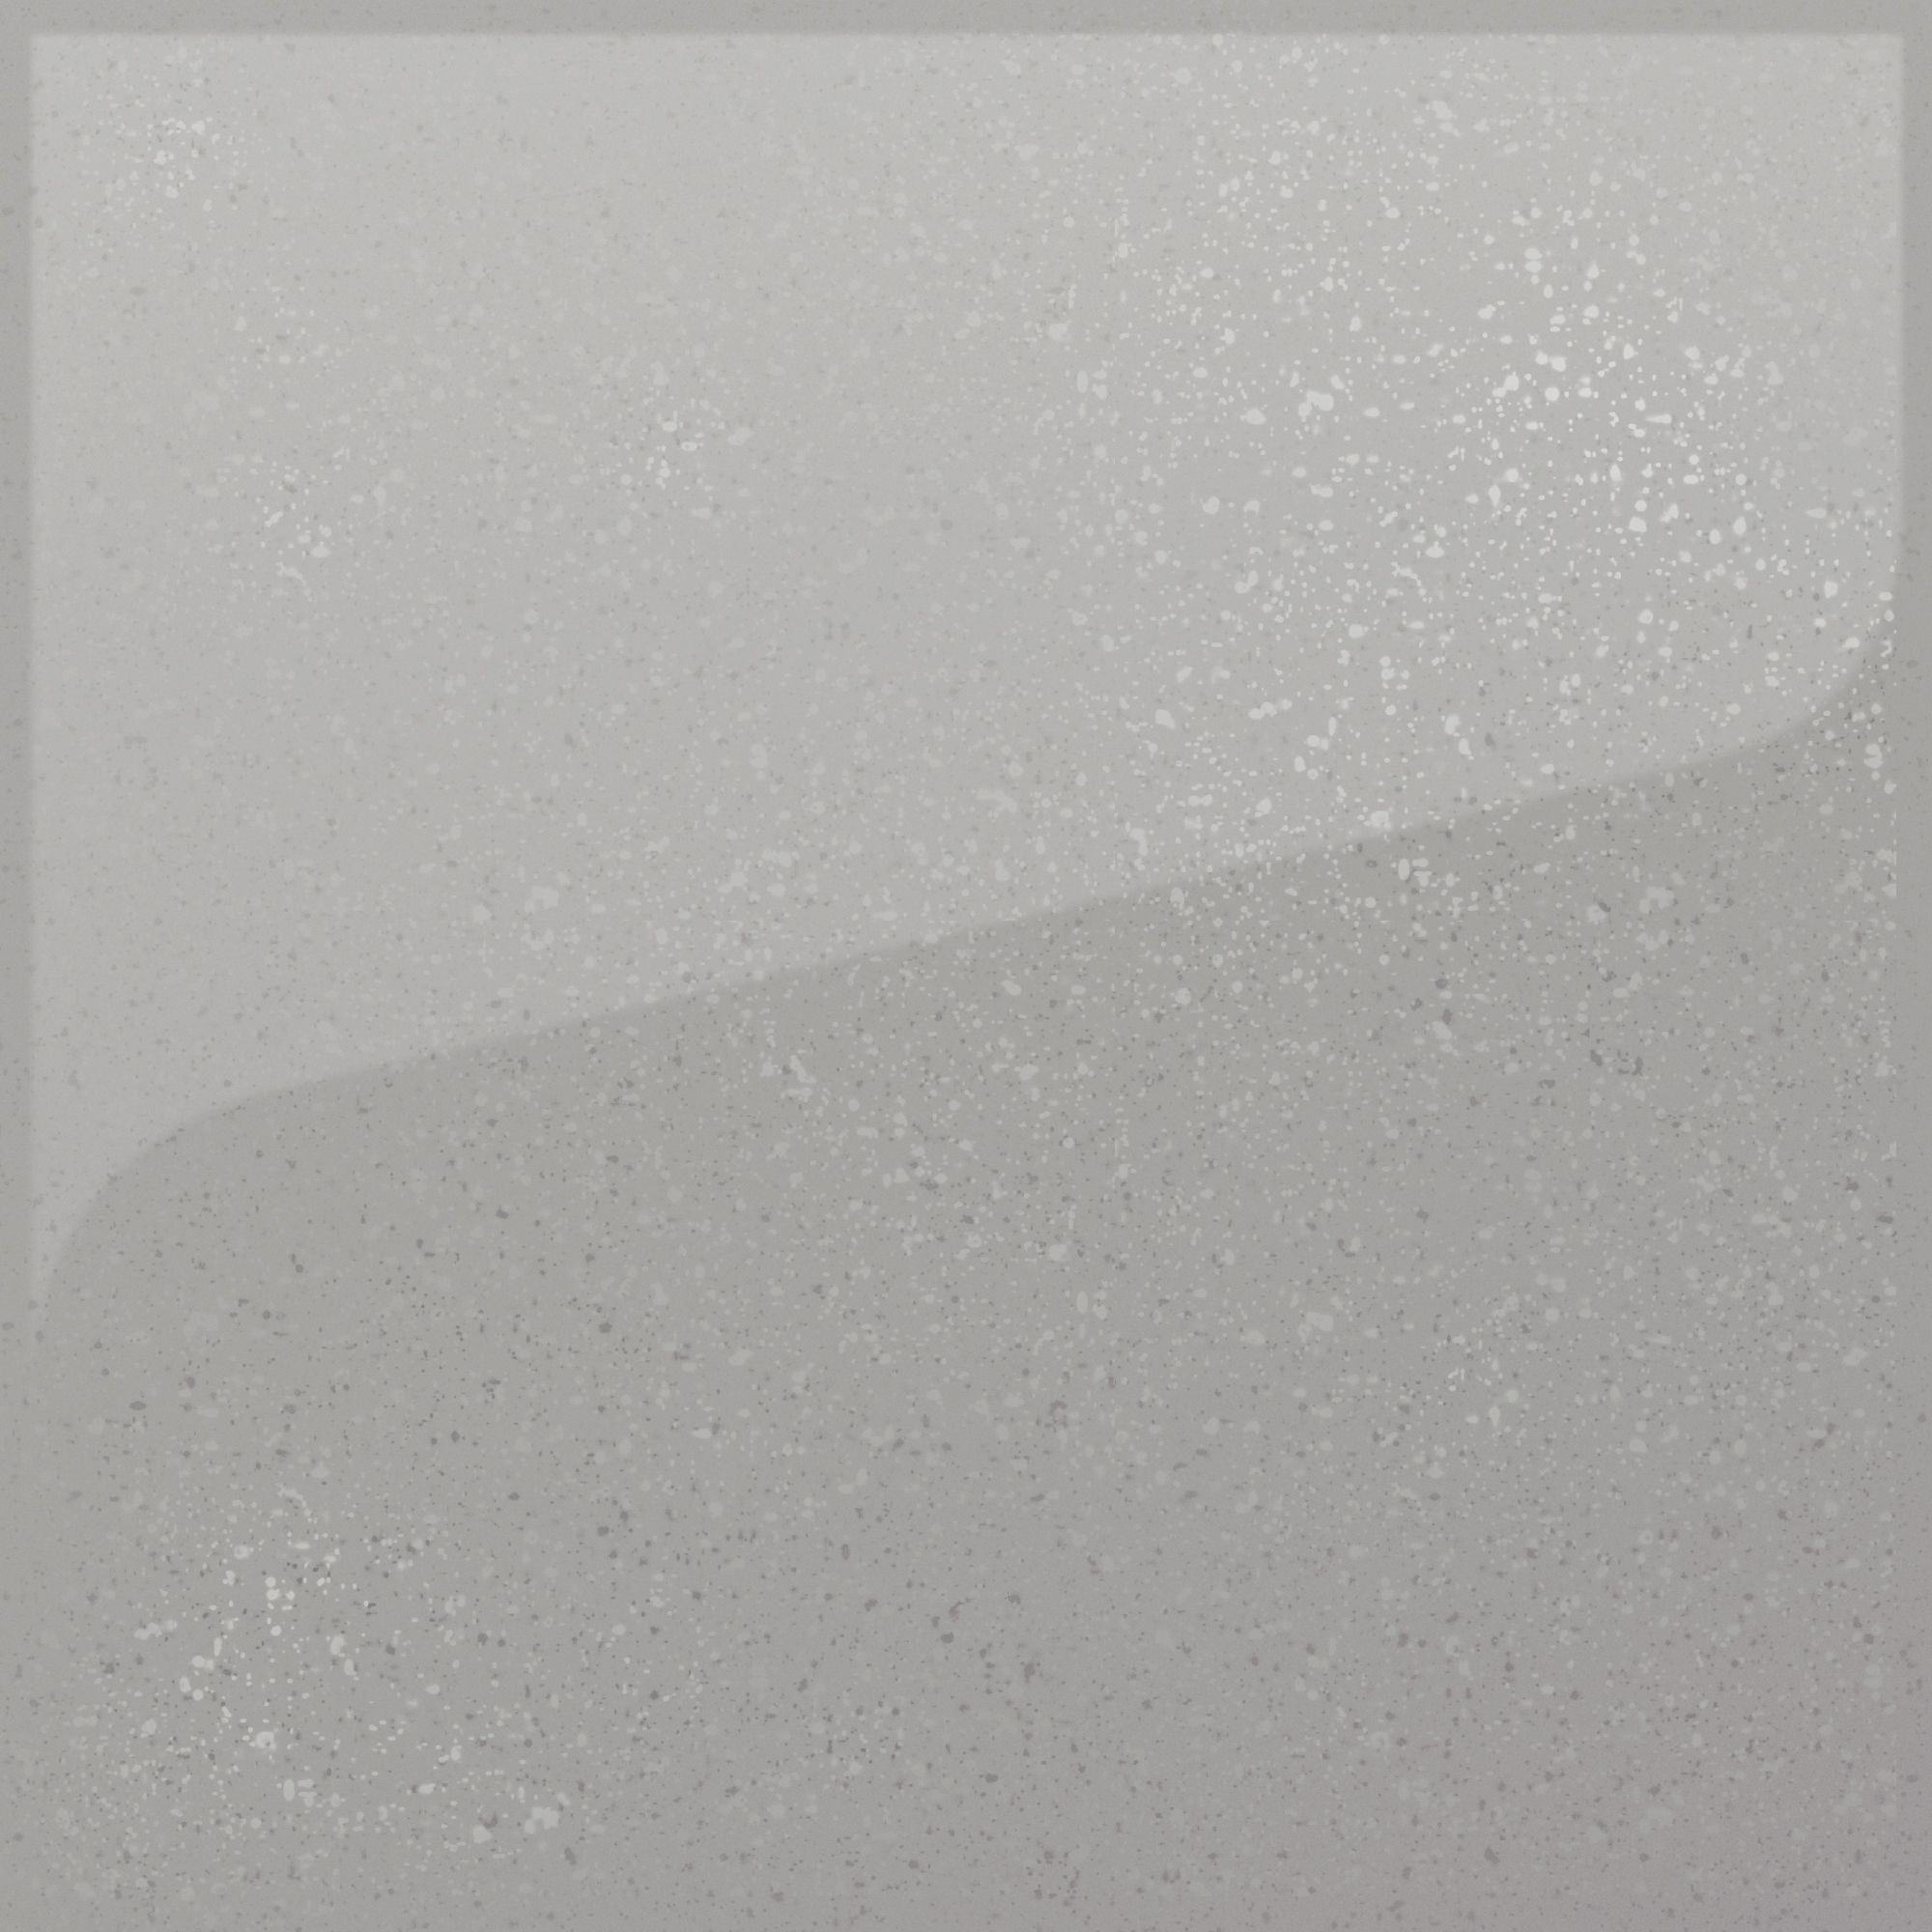 Splashwall Gloss Metallic white 2 sided Shower Panel kit (L)1200mm (W)1200mm (T)4mm